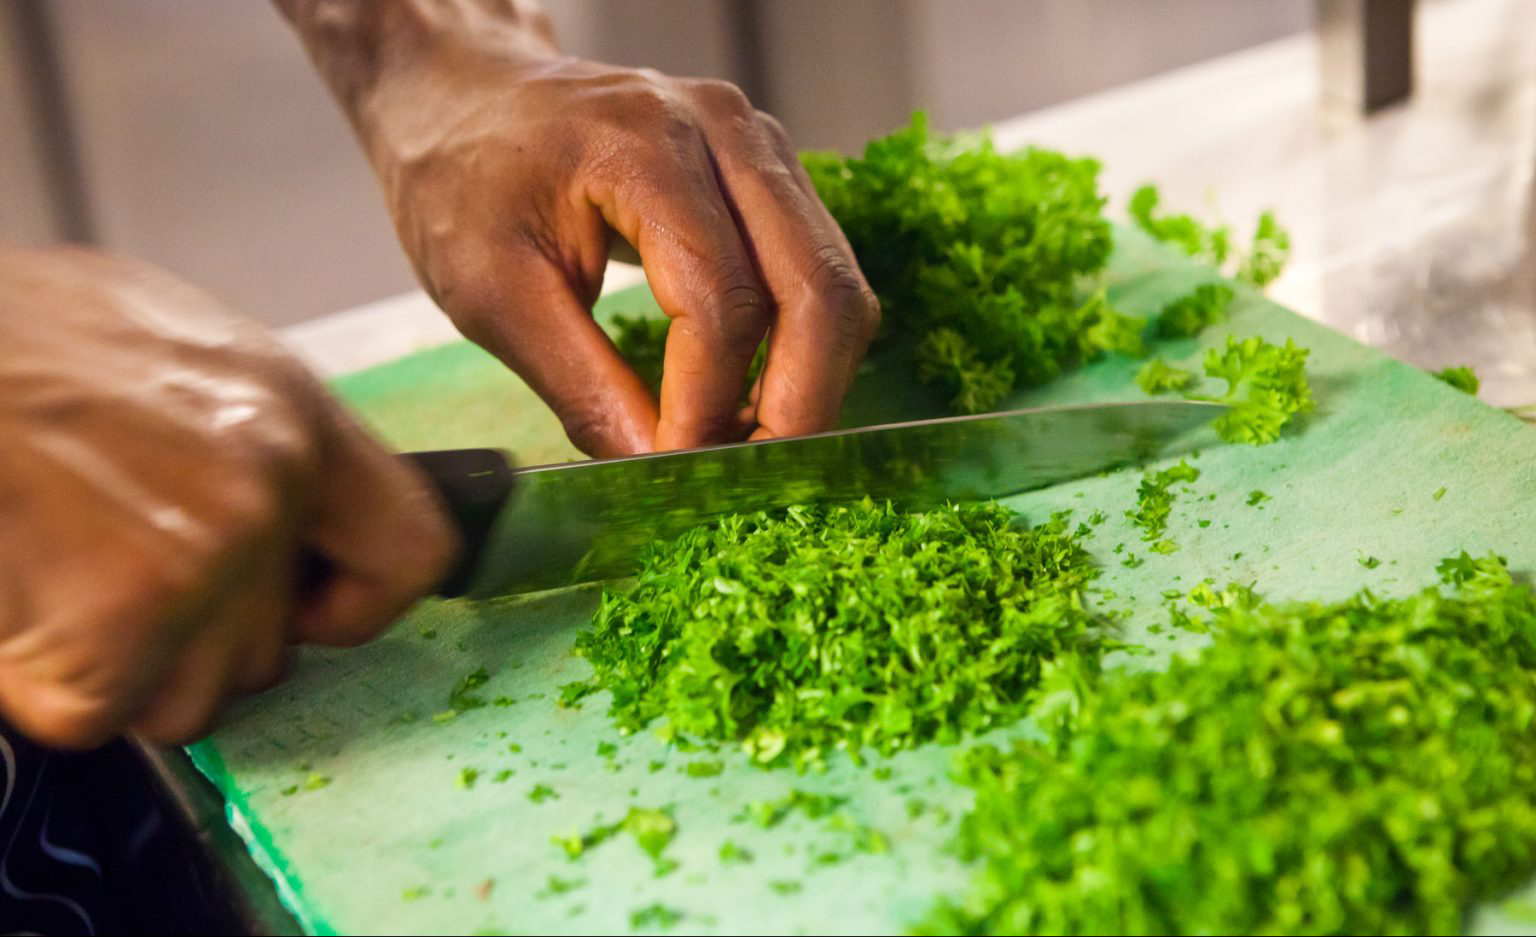 A person chopping herbs on a green cutting board.